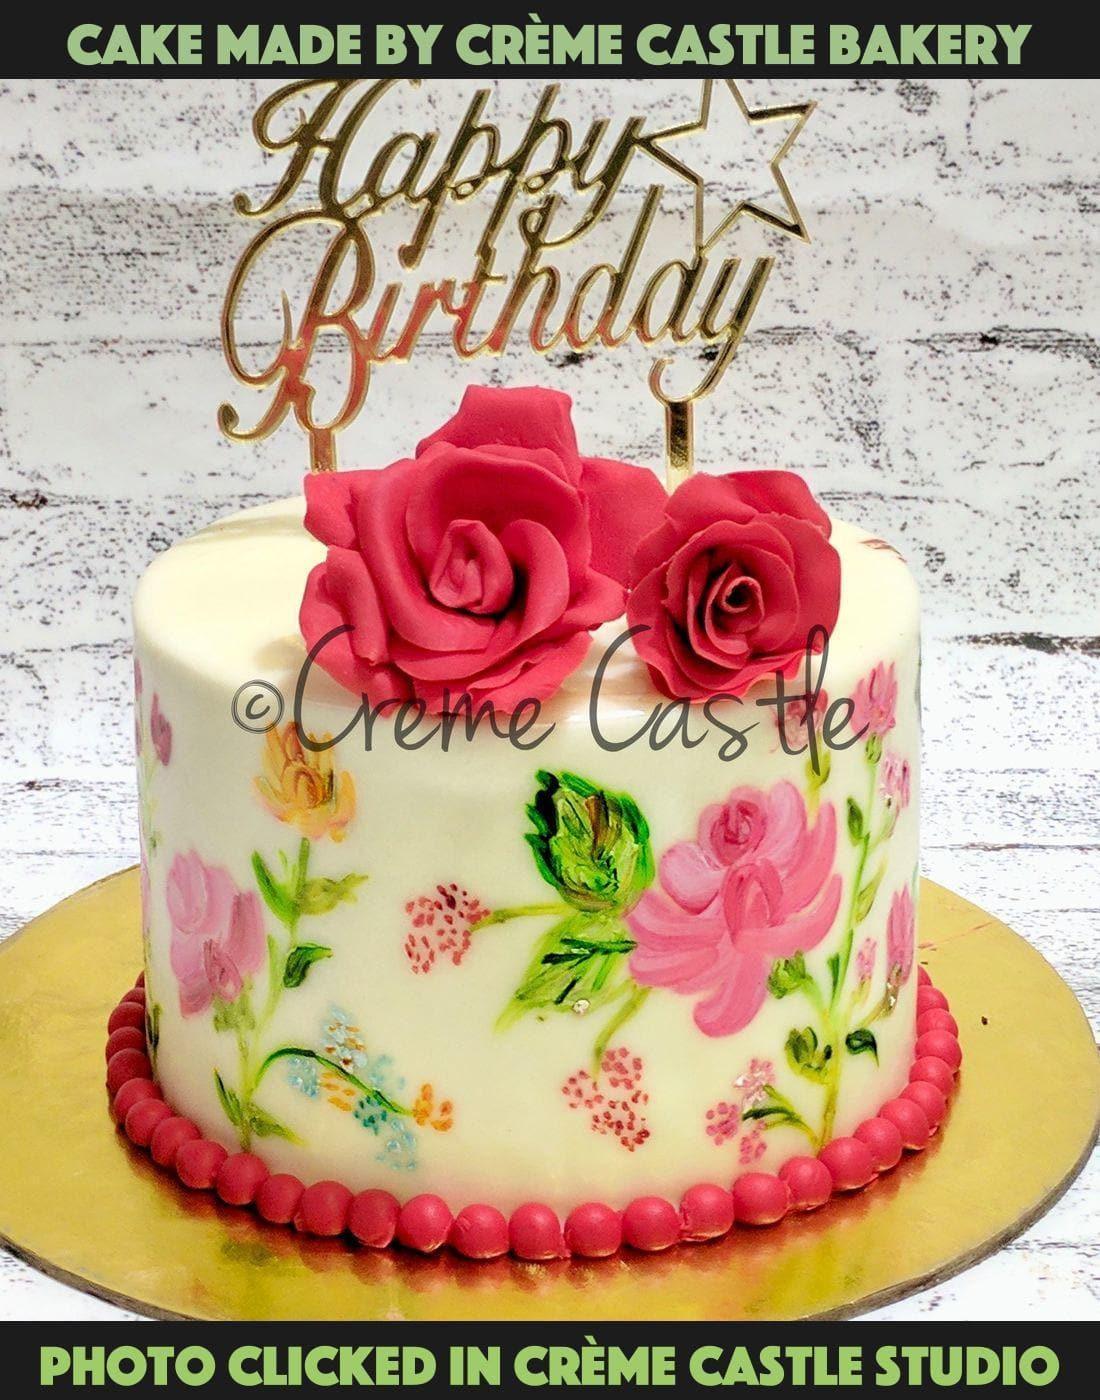 Roses on Heart Theme Cake